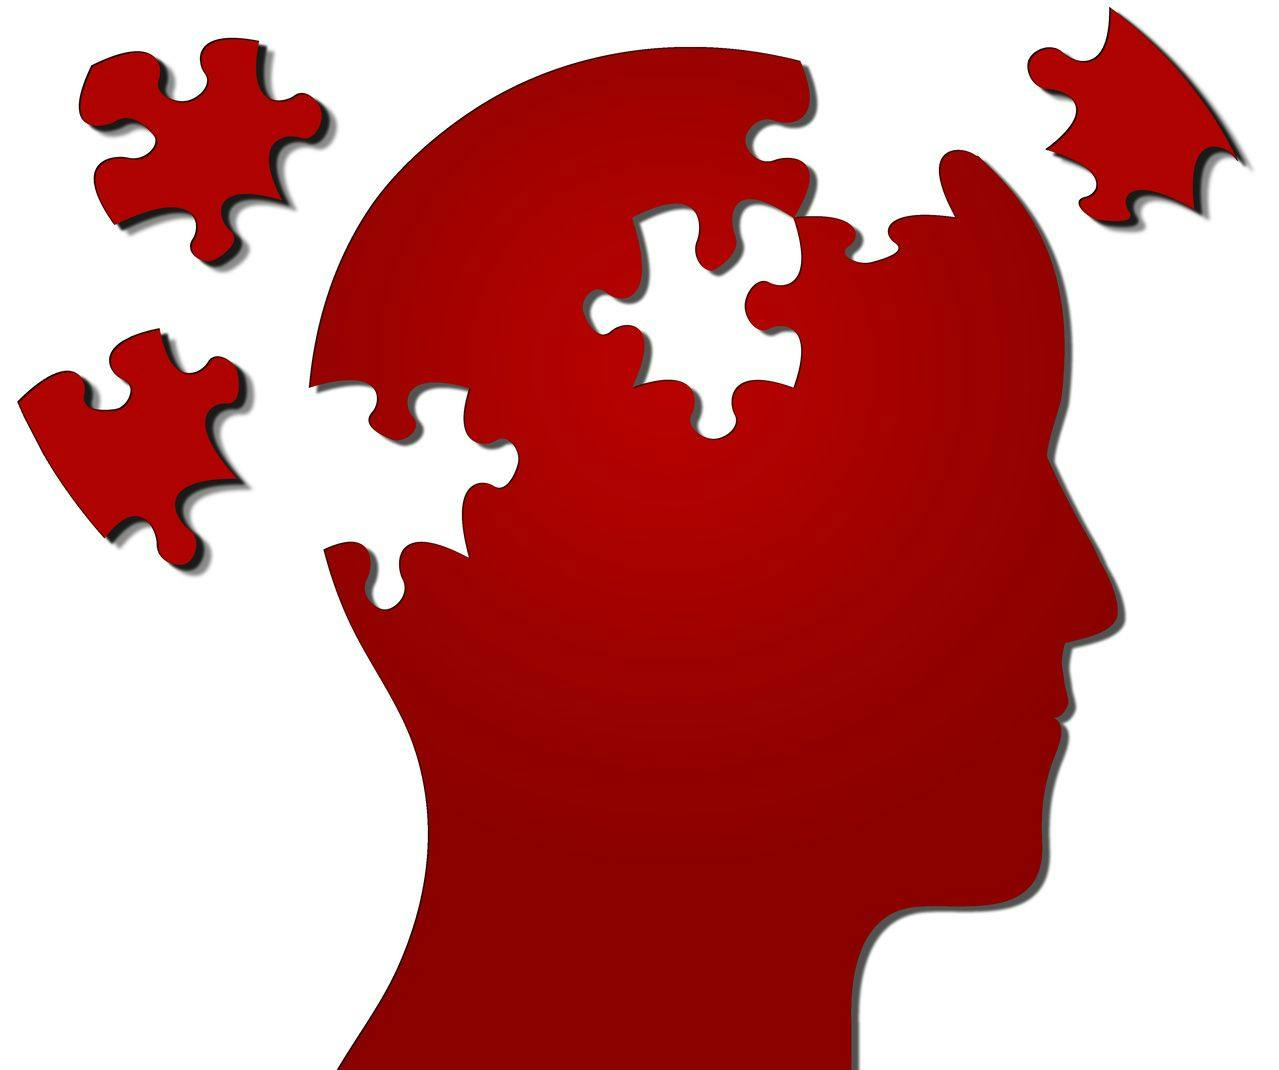 Puzzle pieces representing the brain.